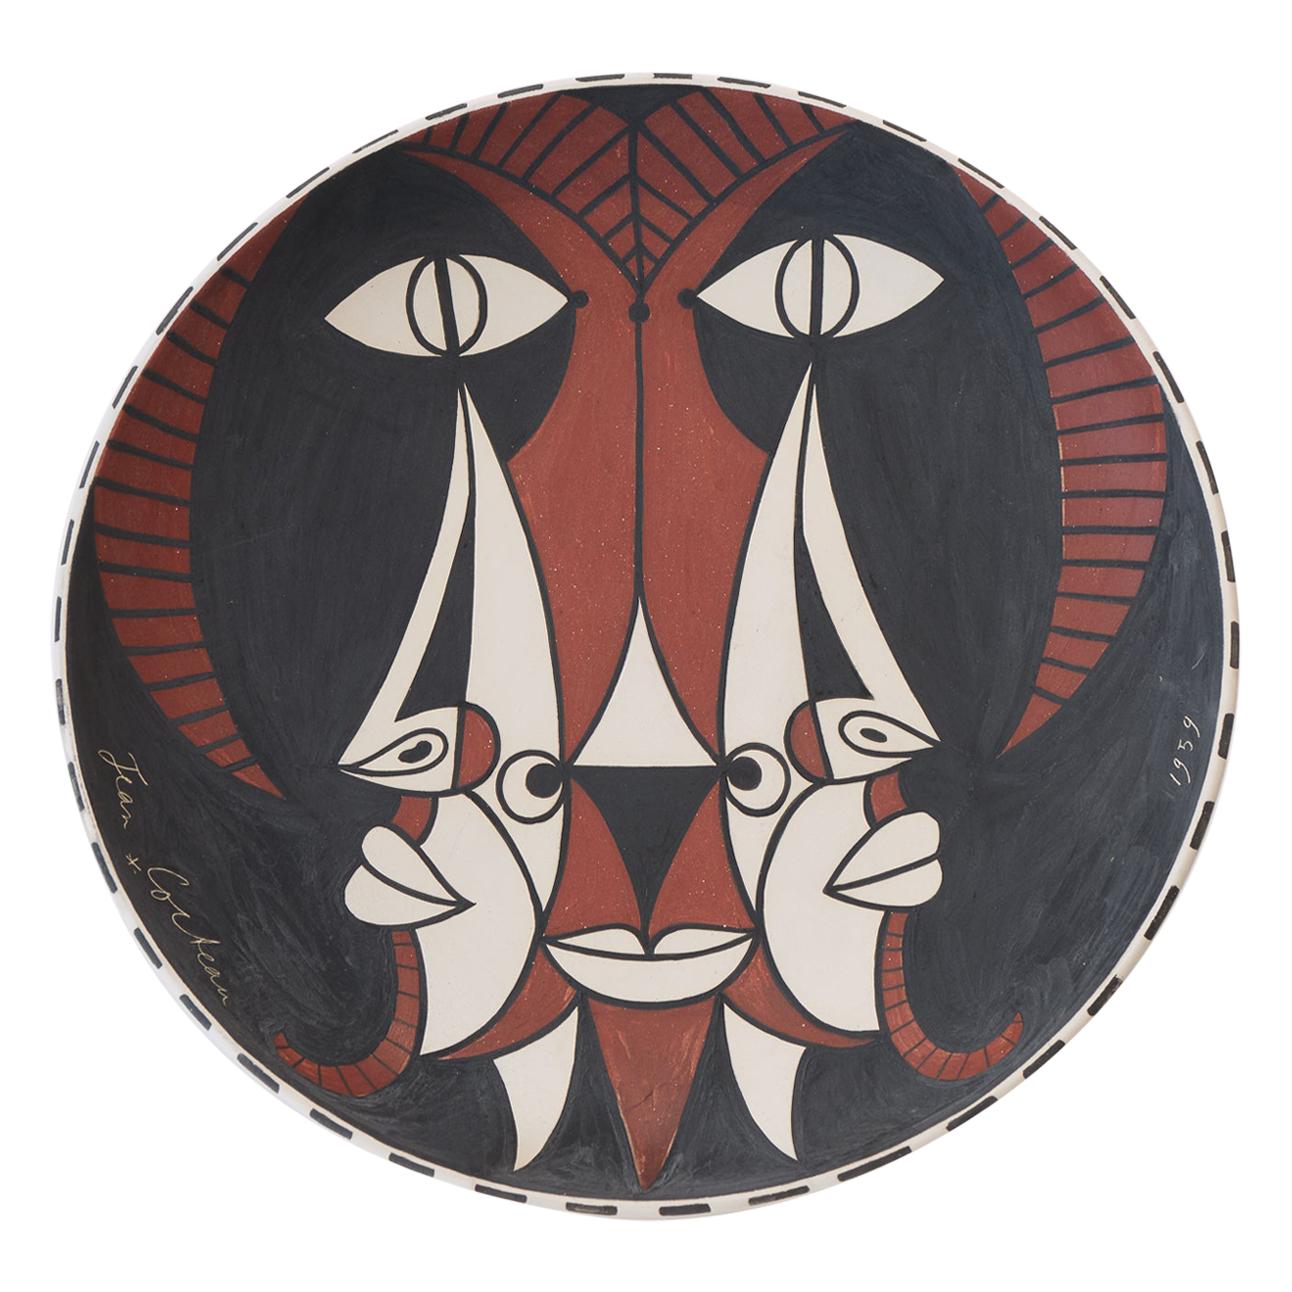 Jean Cocteau Original Edition Large Ceramic Dish "Bouc trois faces", 1959